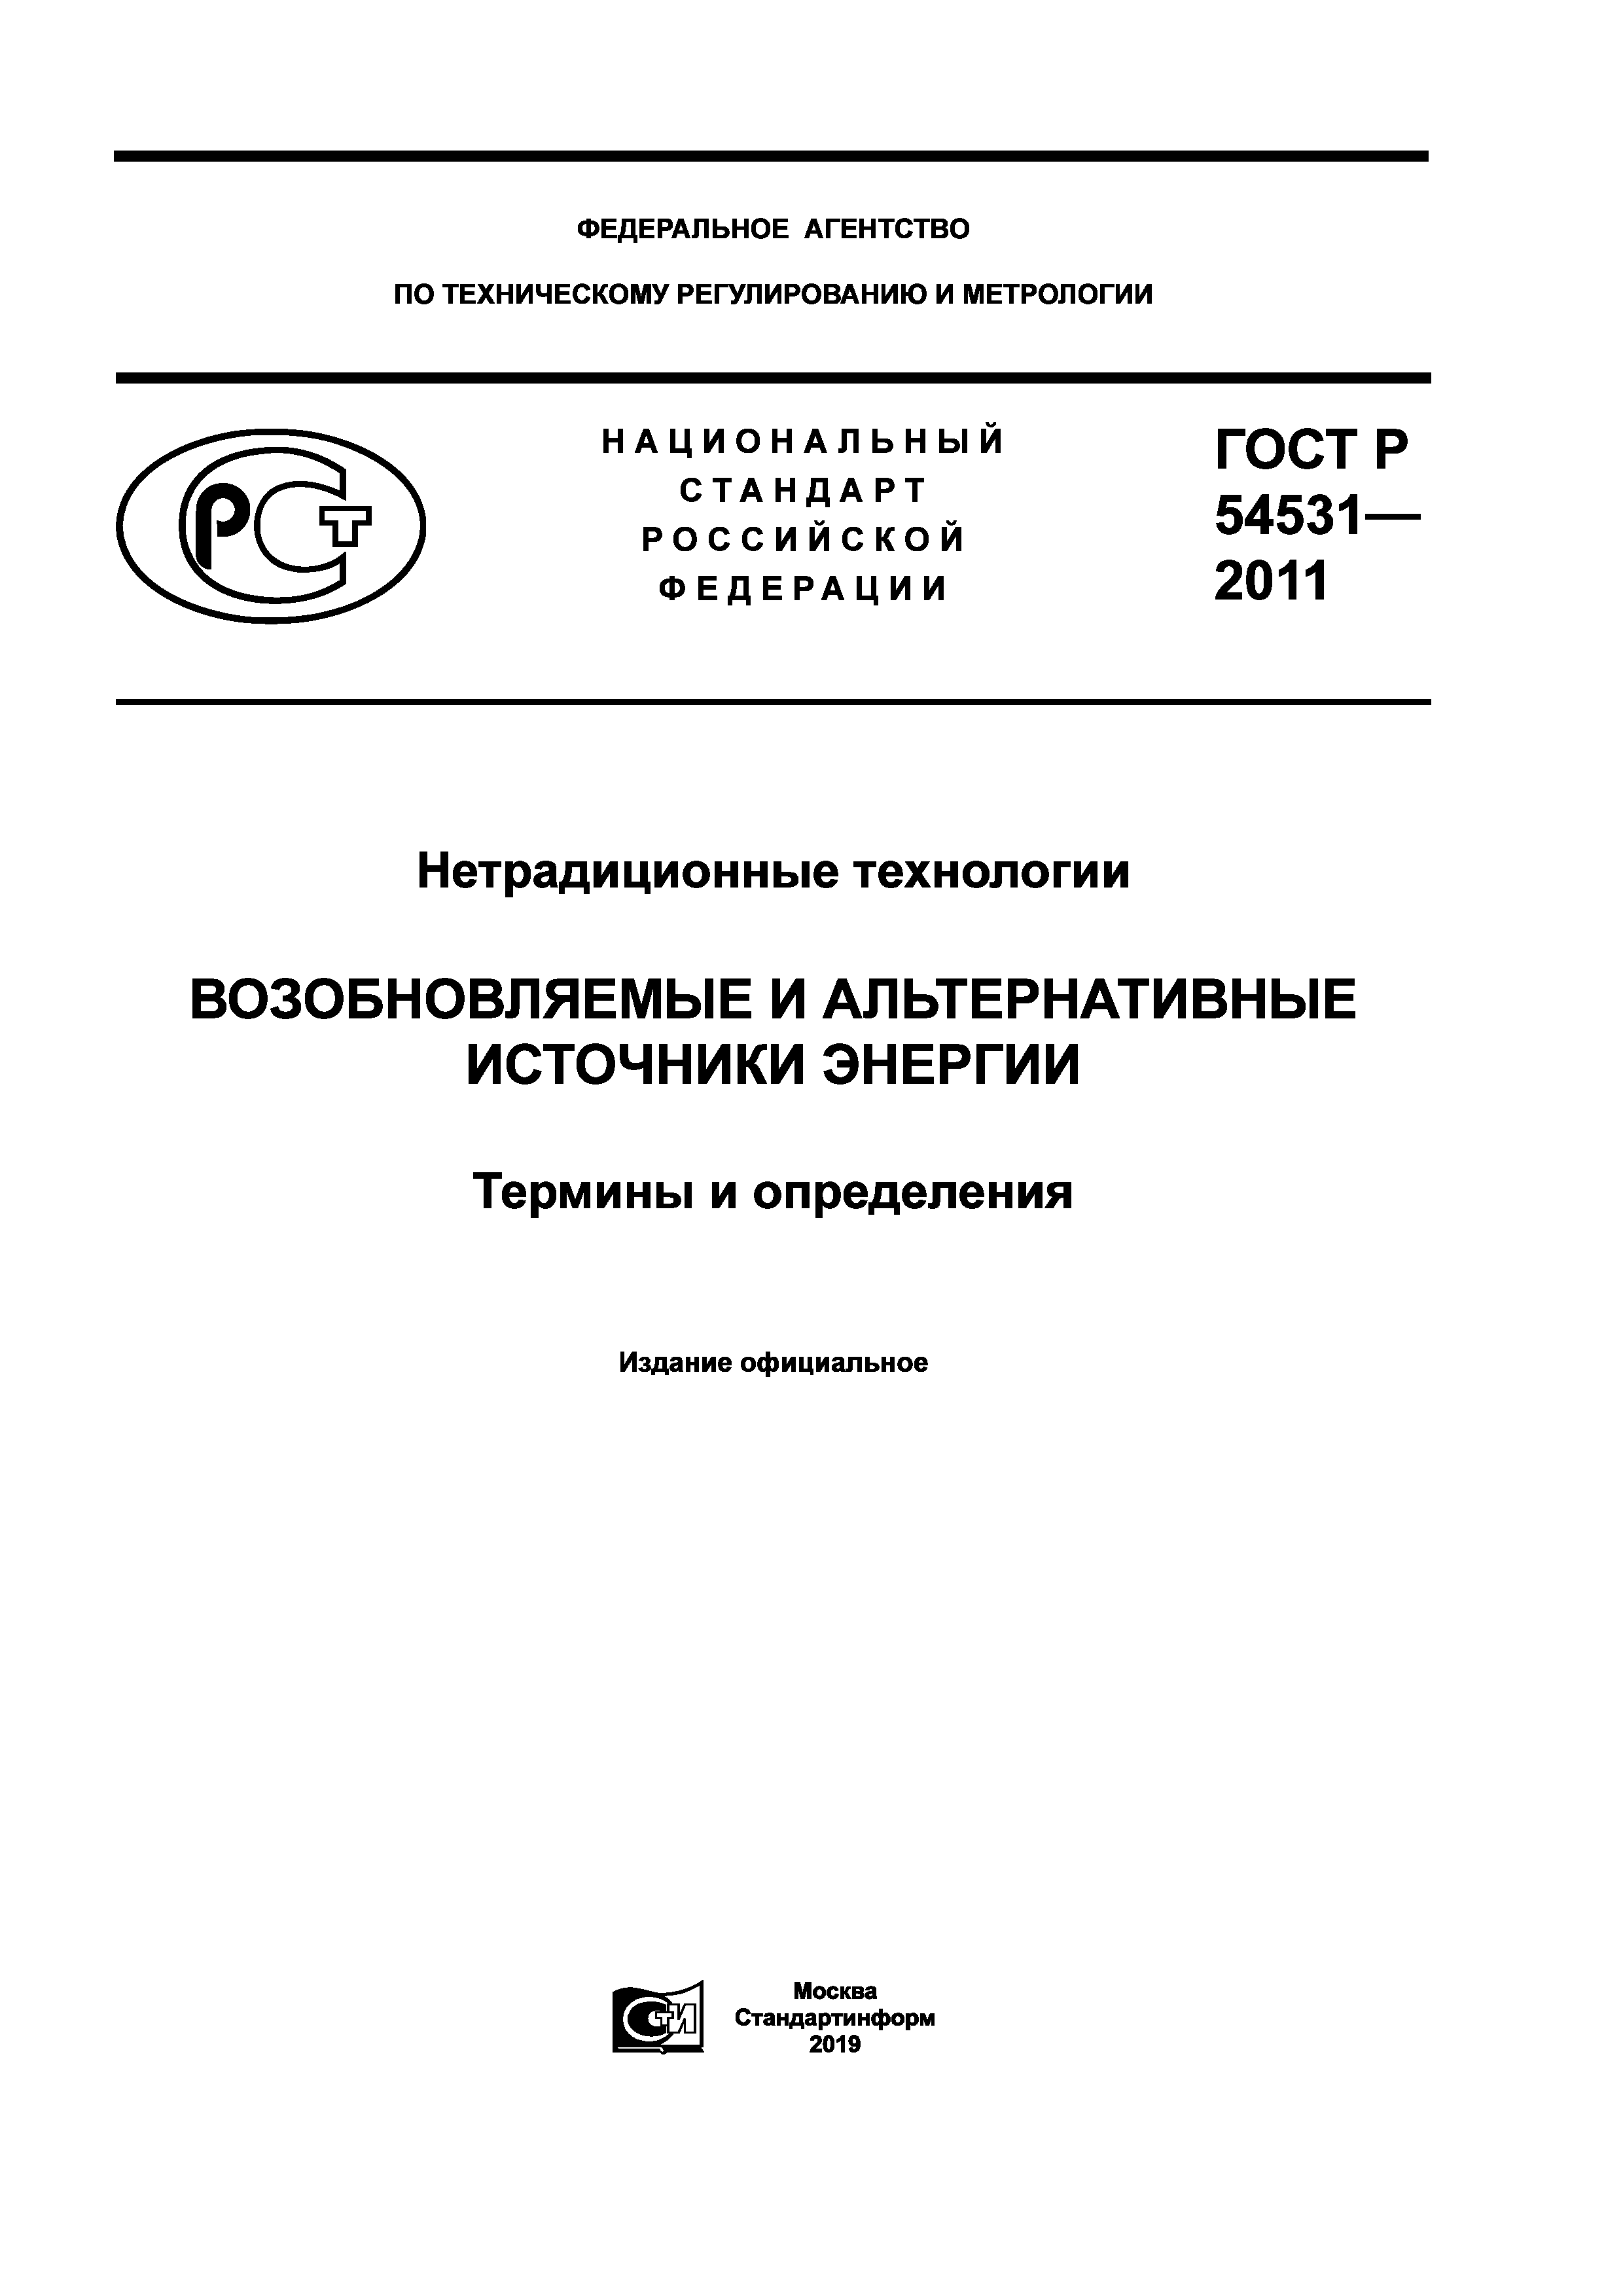 ГОСТ Р 54531-2011